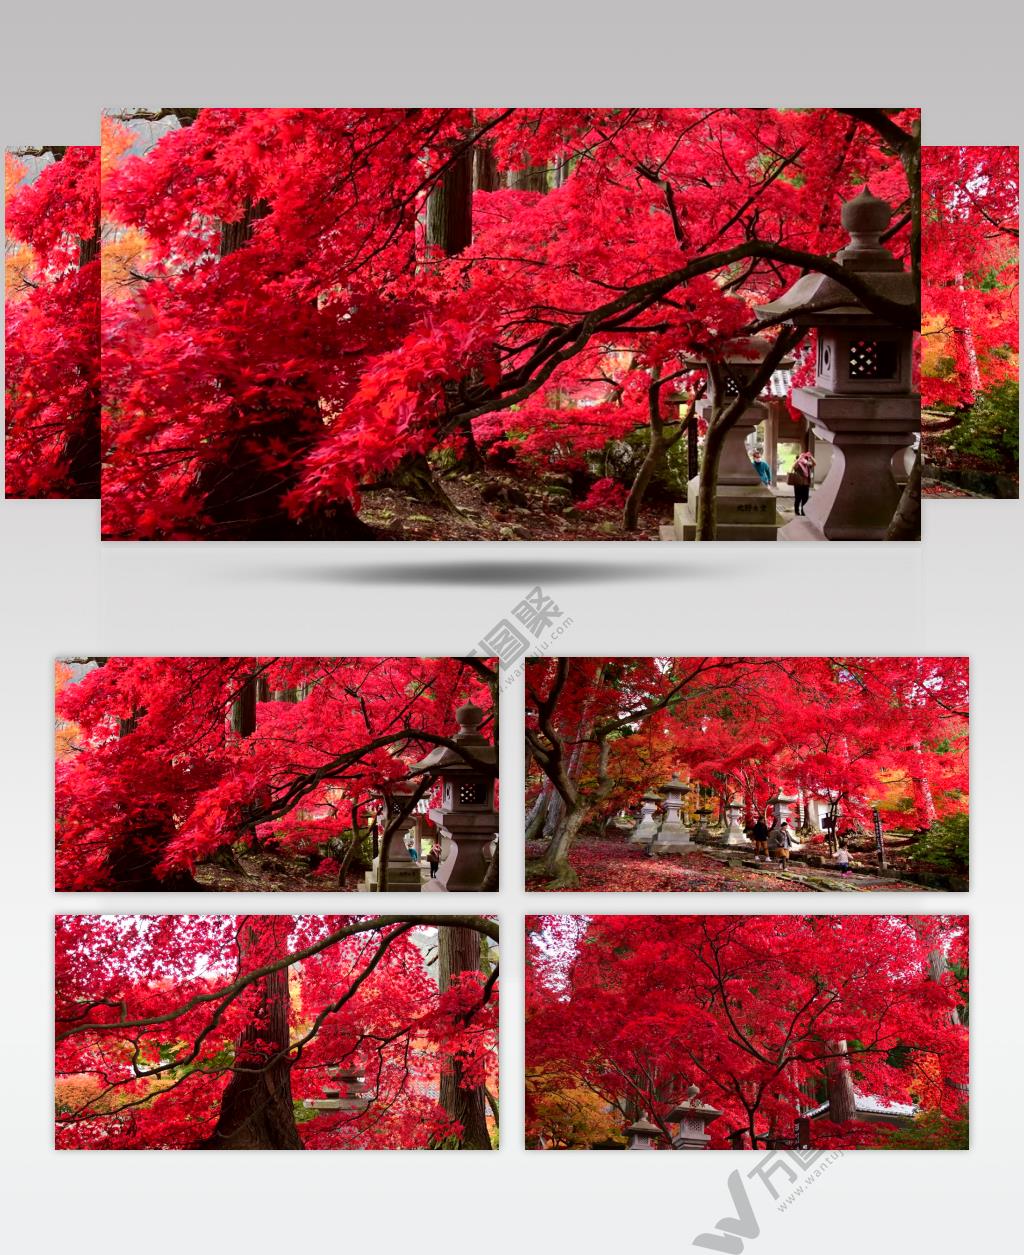 ［4K］ 红叶树 4K片源 超高清实拍视频素材 自然风景山水花草树木瀑布超清素材